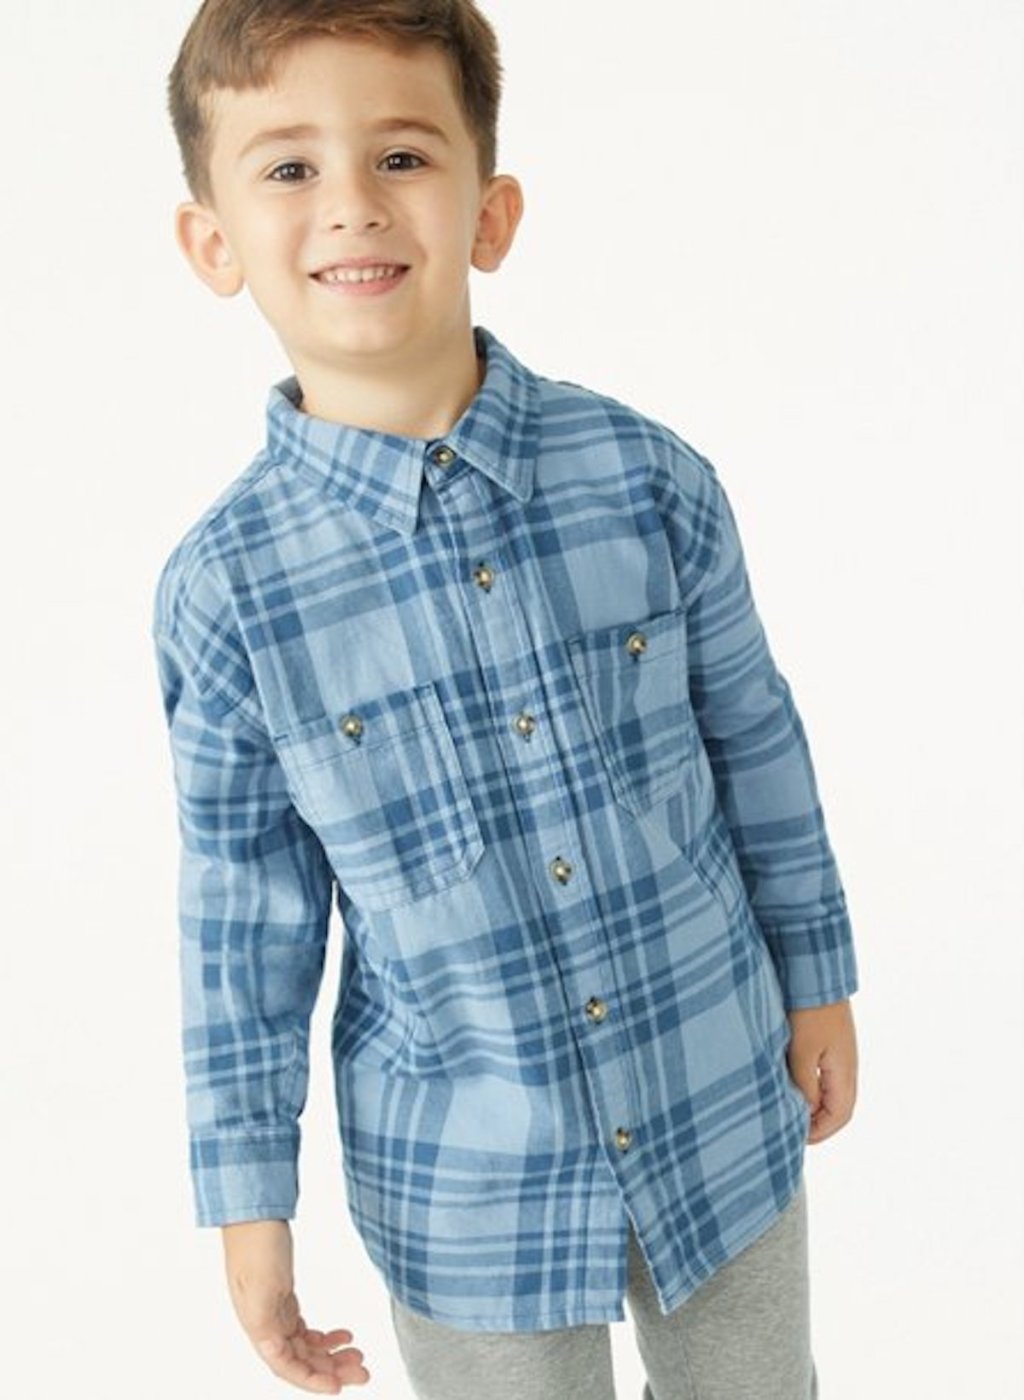 stock photo of boy wearing blue plaid shirt